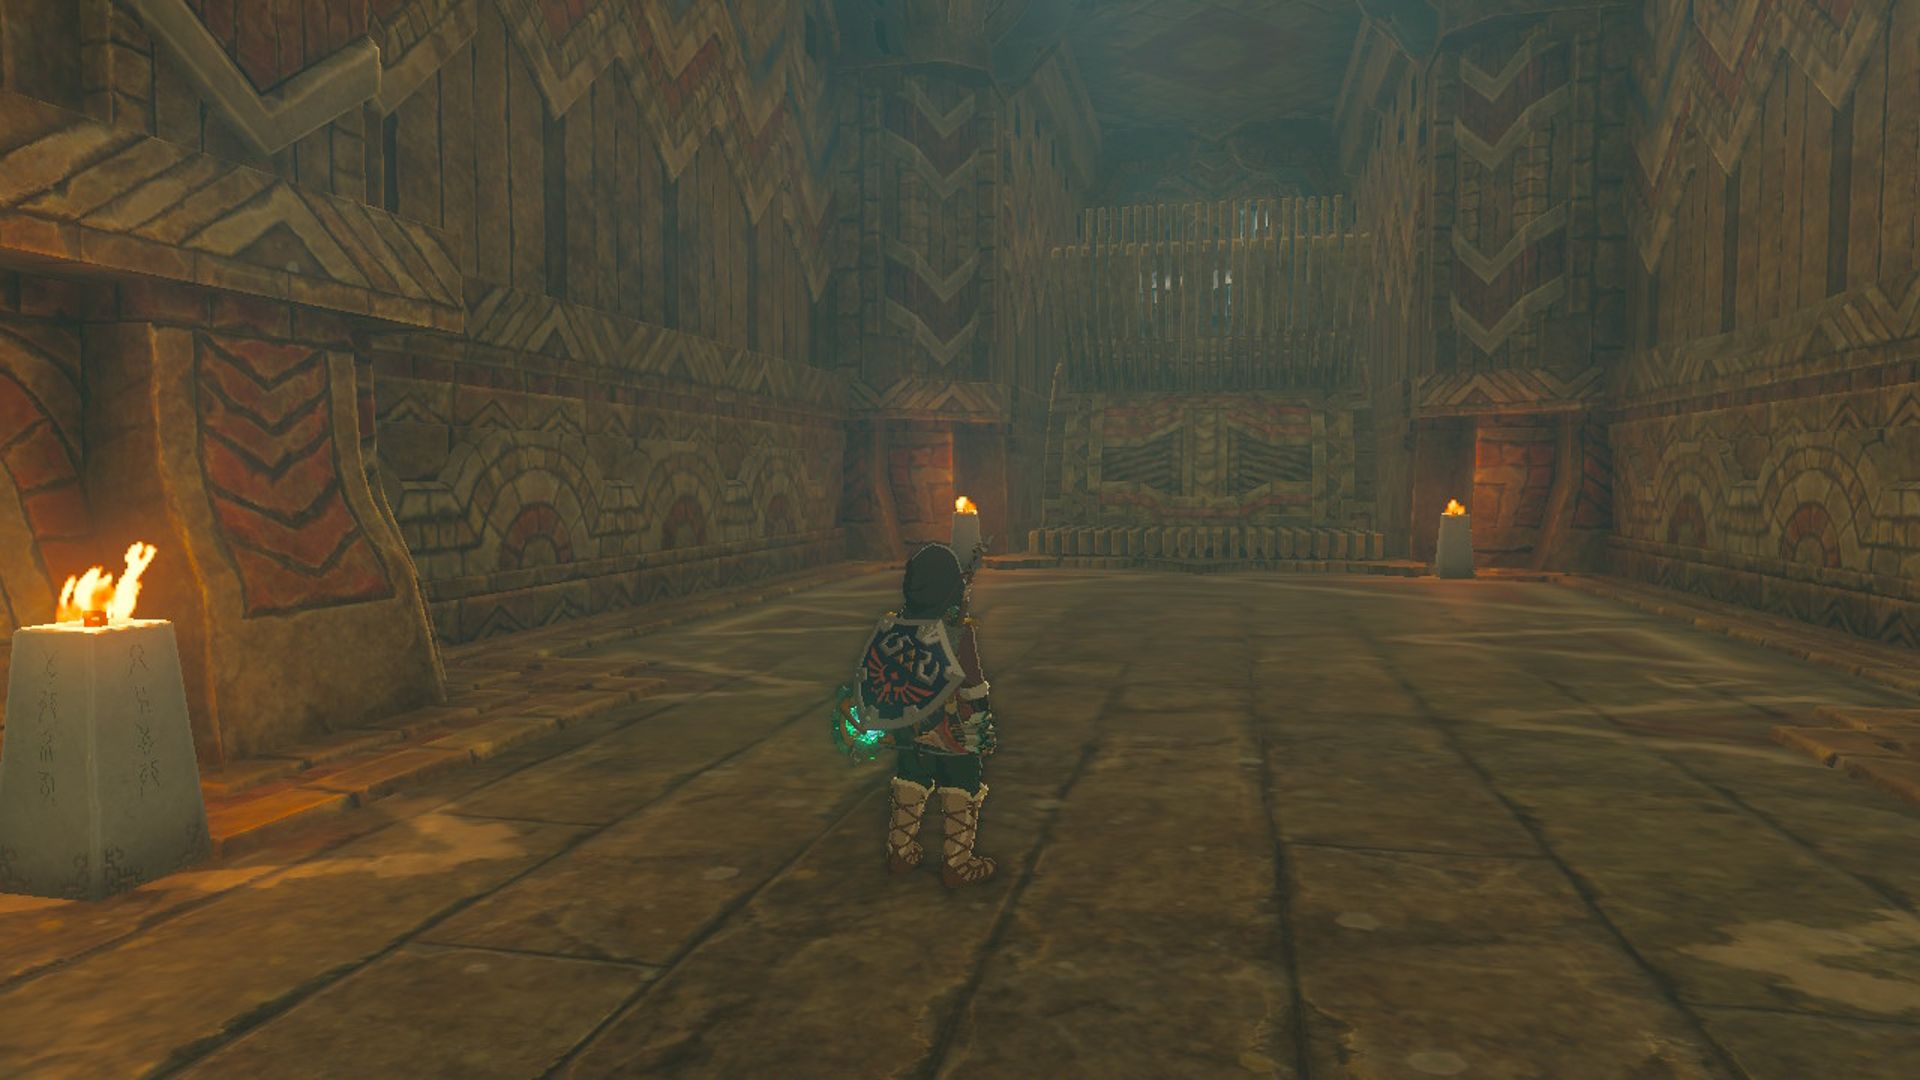 The Legend Of Zelda Air Mata Tautan Kerajaan Melihat Roda Berputar Di Kuil Angin